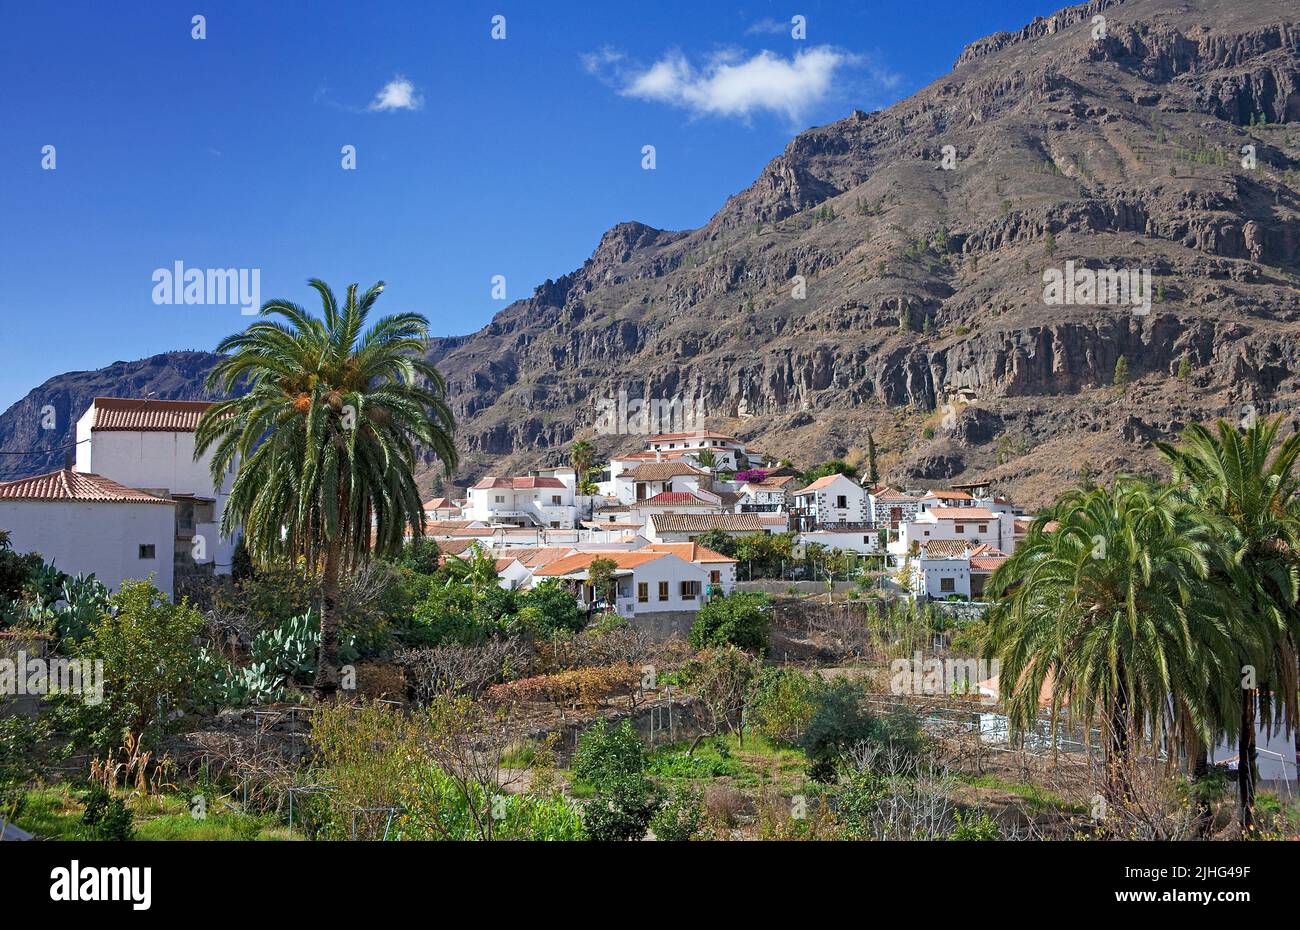 Le petit village Fataga, San Bartolome de Tirajana, Grand Canary, îles Canaries, Espagne, Europe Banque D'Images